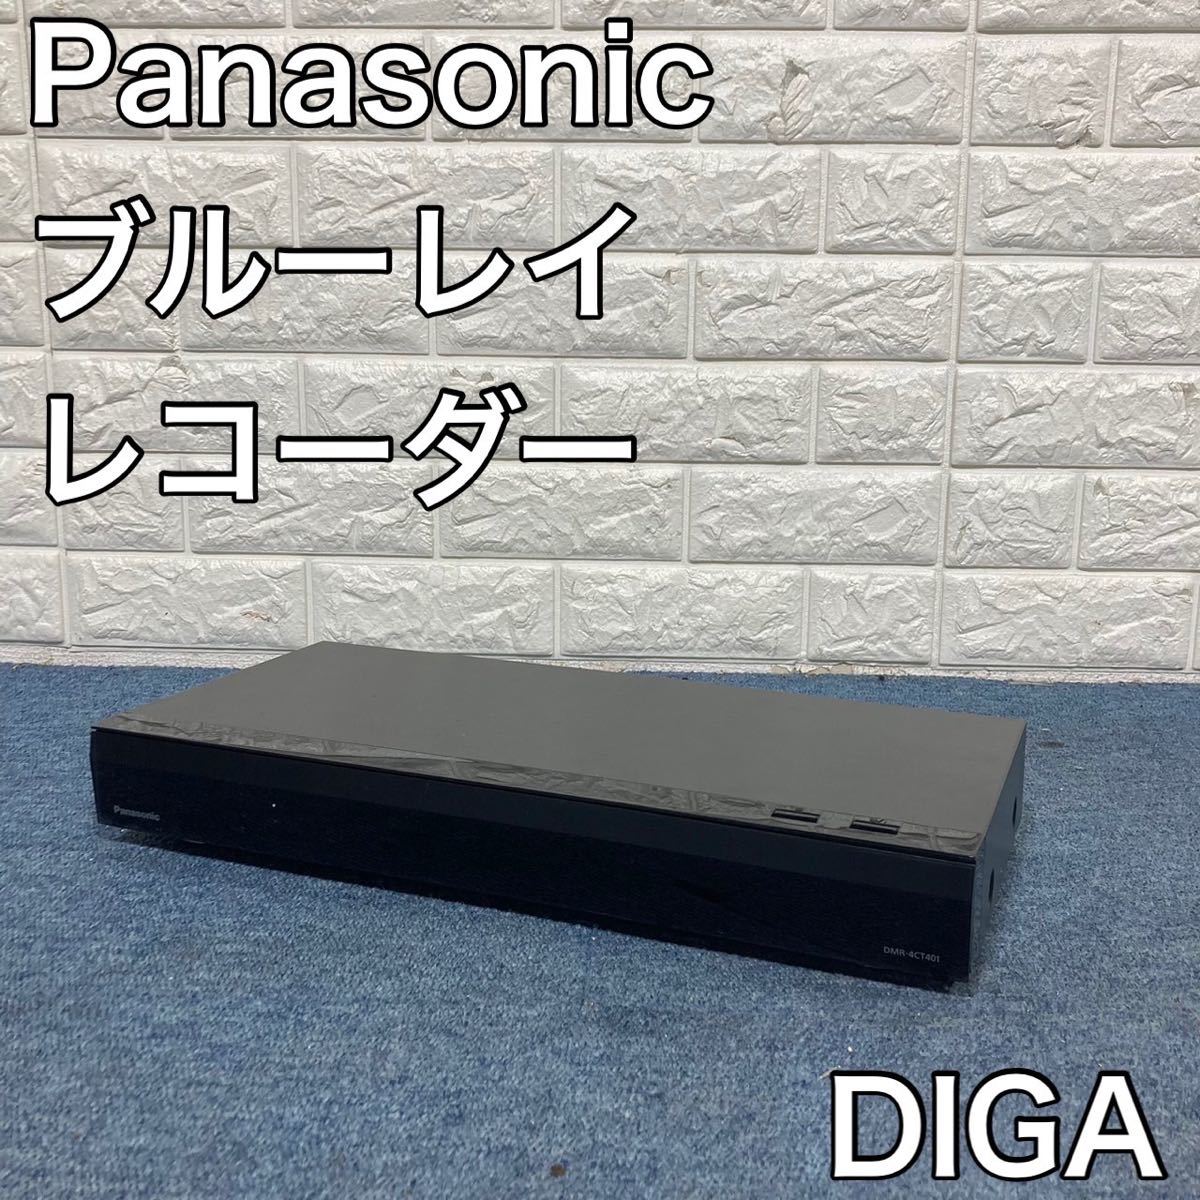 Panasonic ブルーレイレコーダー DMR-4CT401 B179